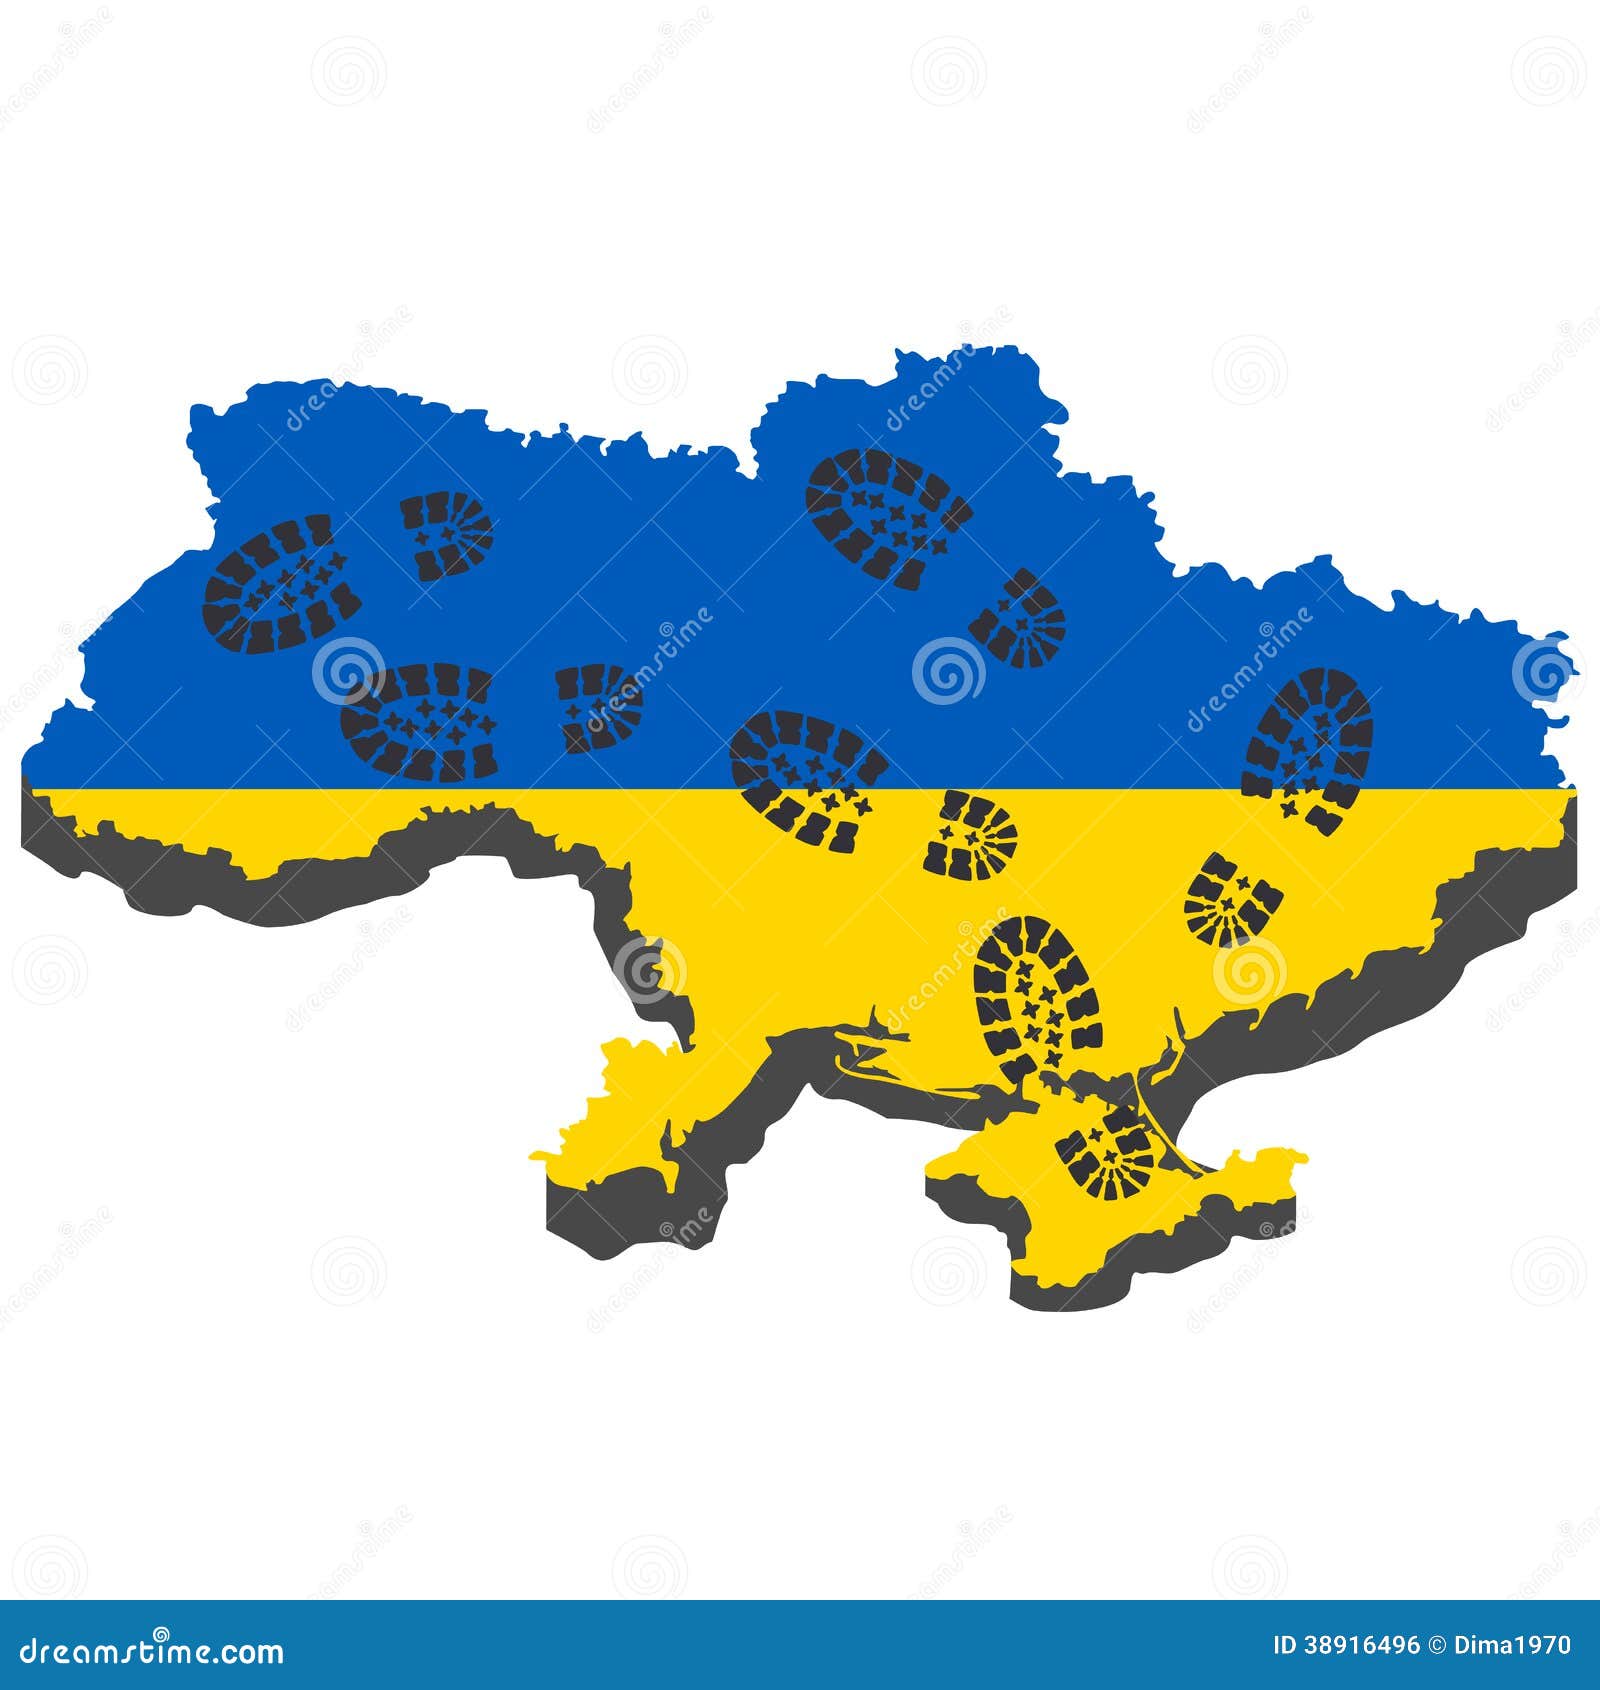 clipart map ukraine - photo #20